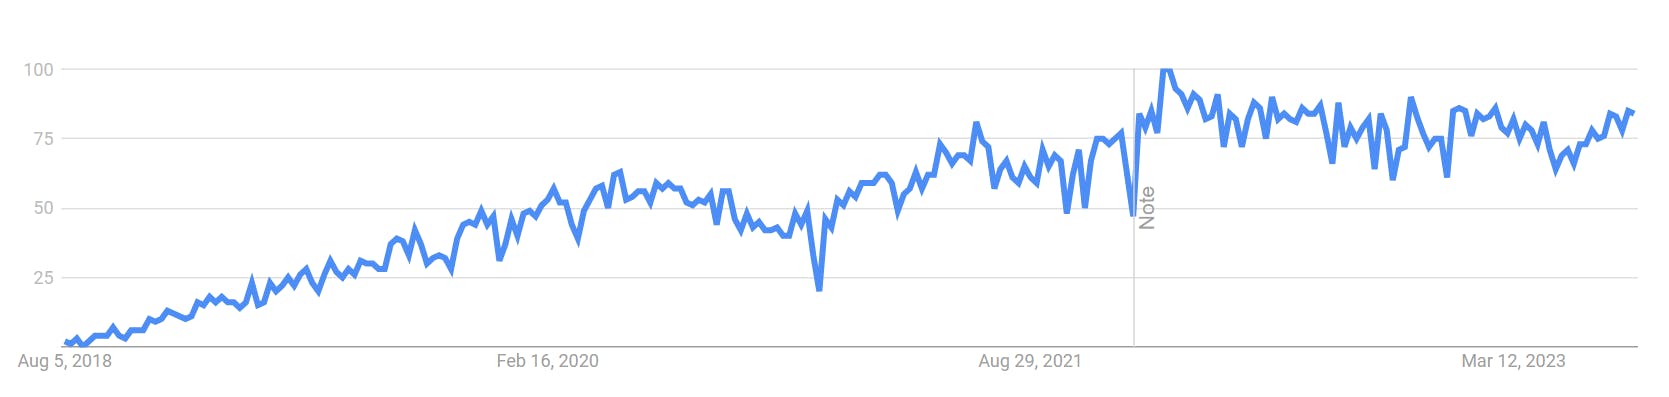 Google Trends Result of "Azure DevOps" in last 5 years